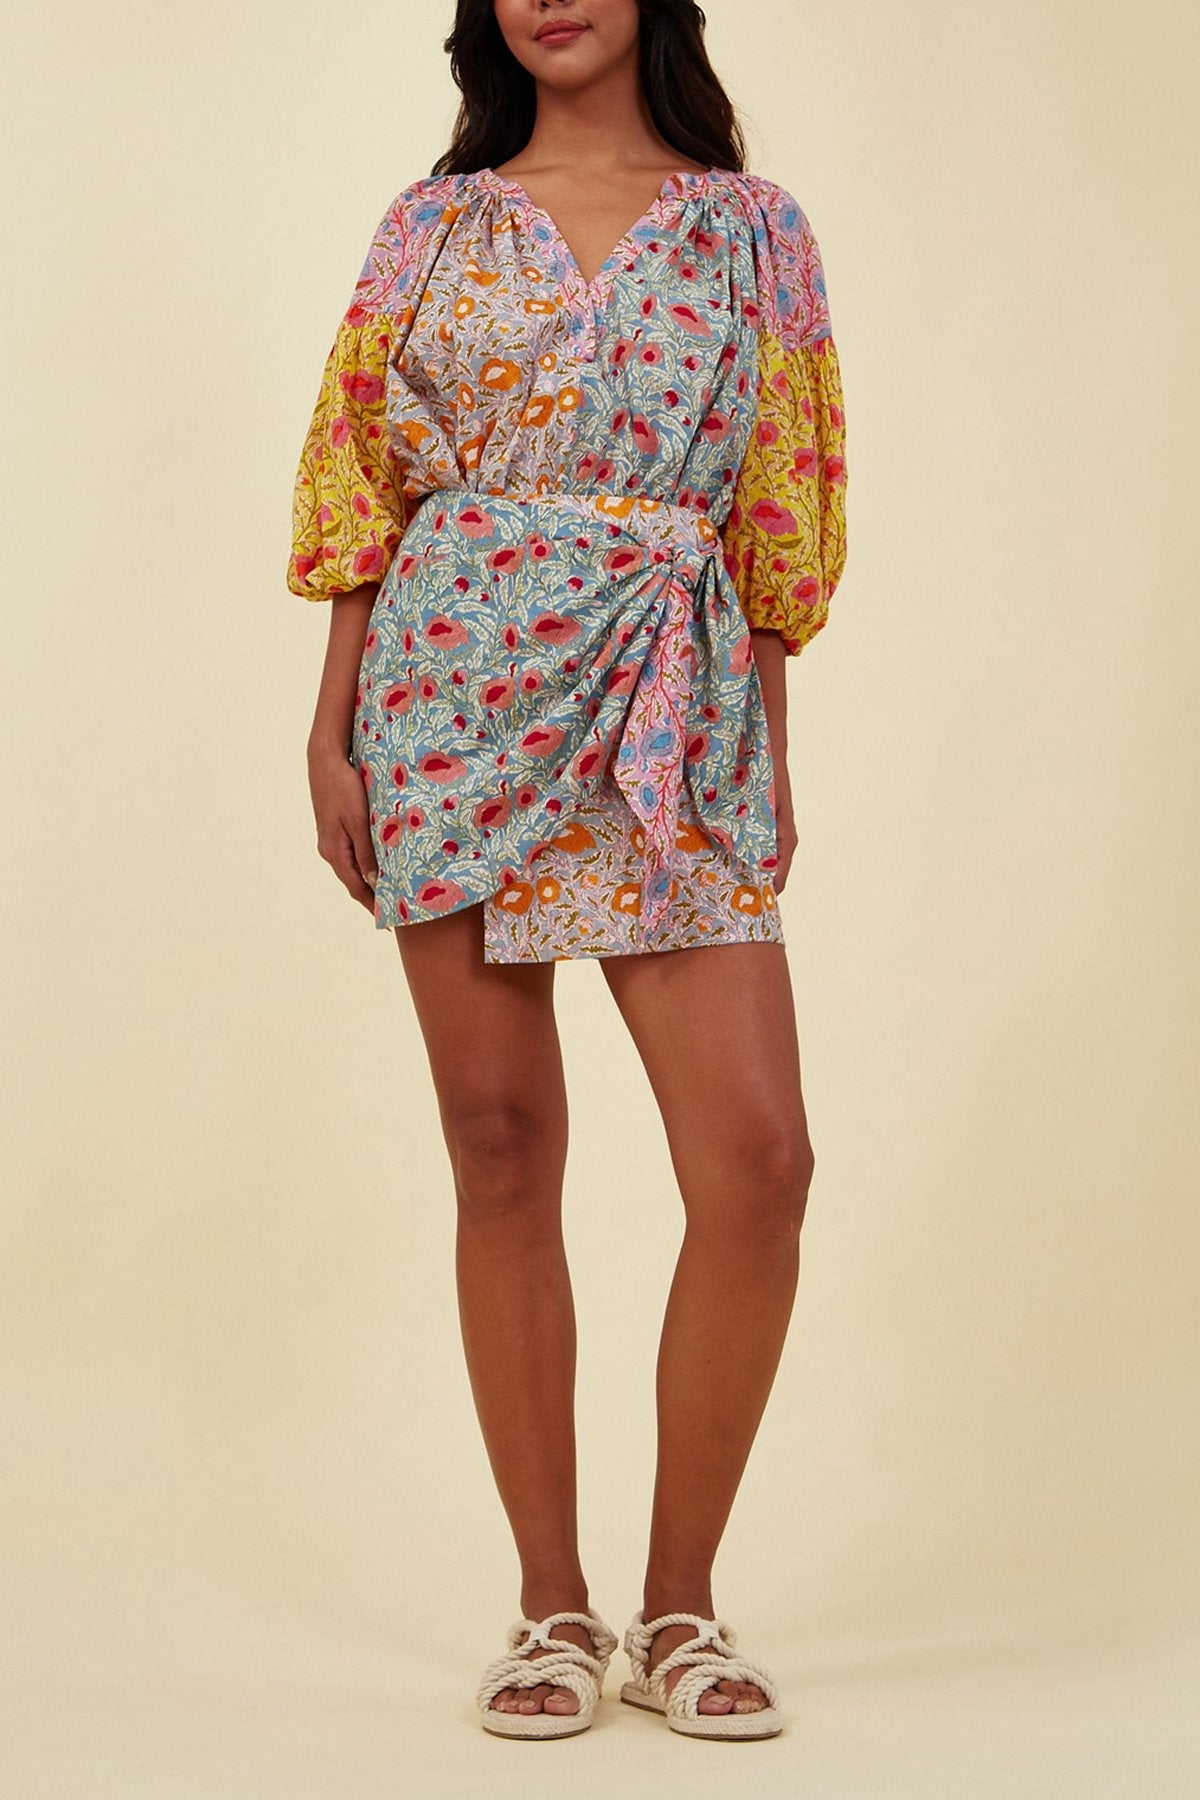 Dellilah Wrap Skirt in Multicolor - shop-olivia.com